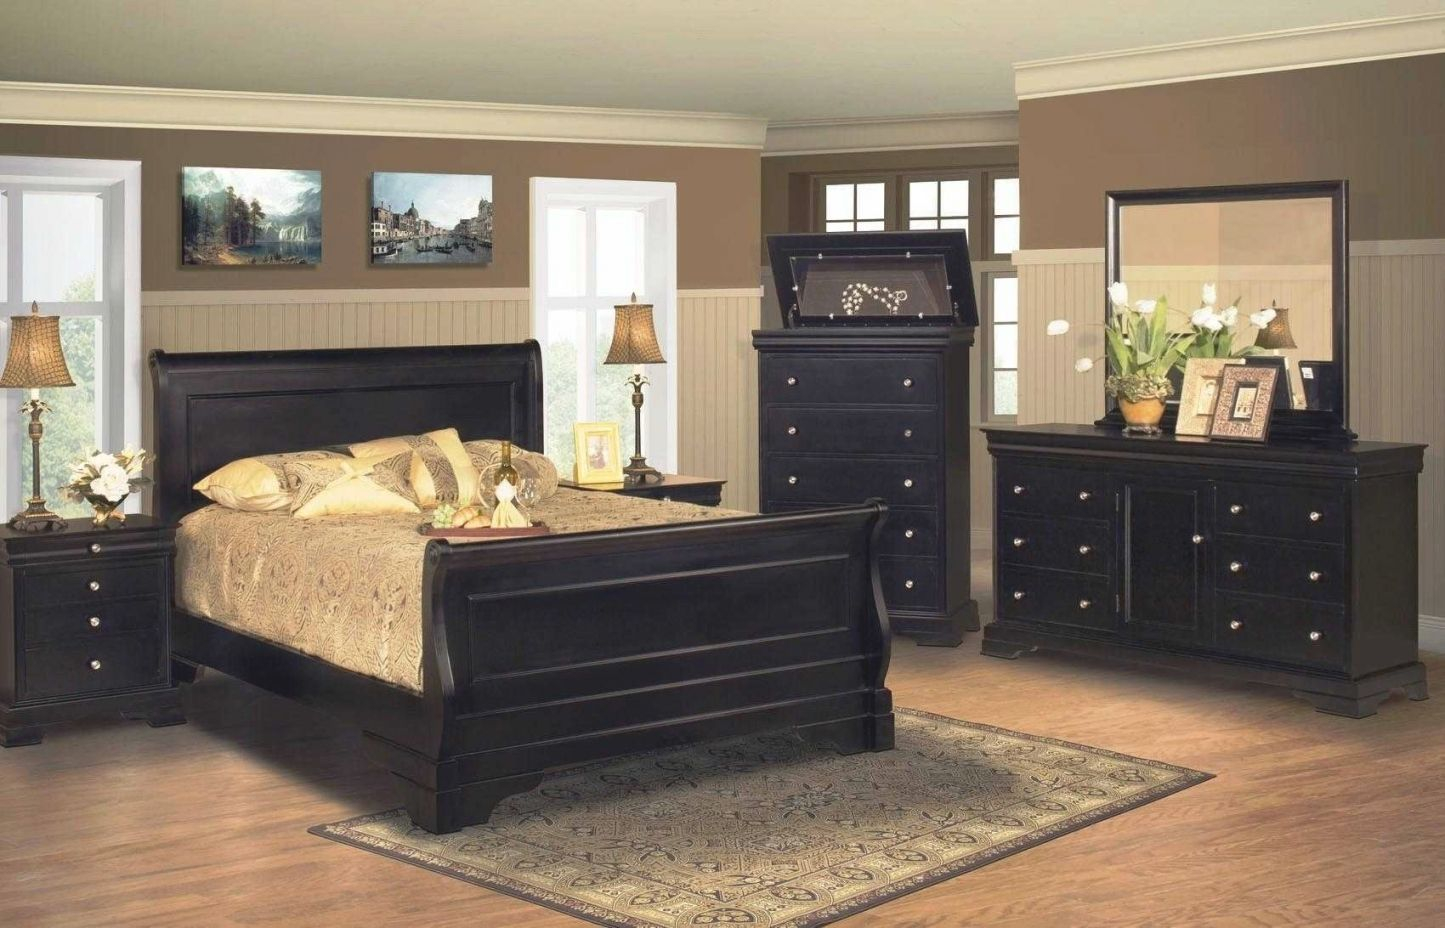 Queen Bed Set With Mattress Included Best Mattress Kitchen Ideas regarding dimensions 1445 X 928